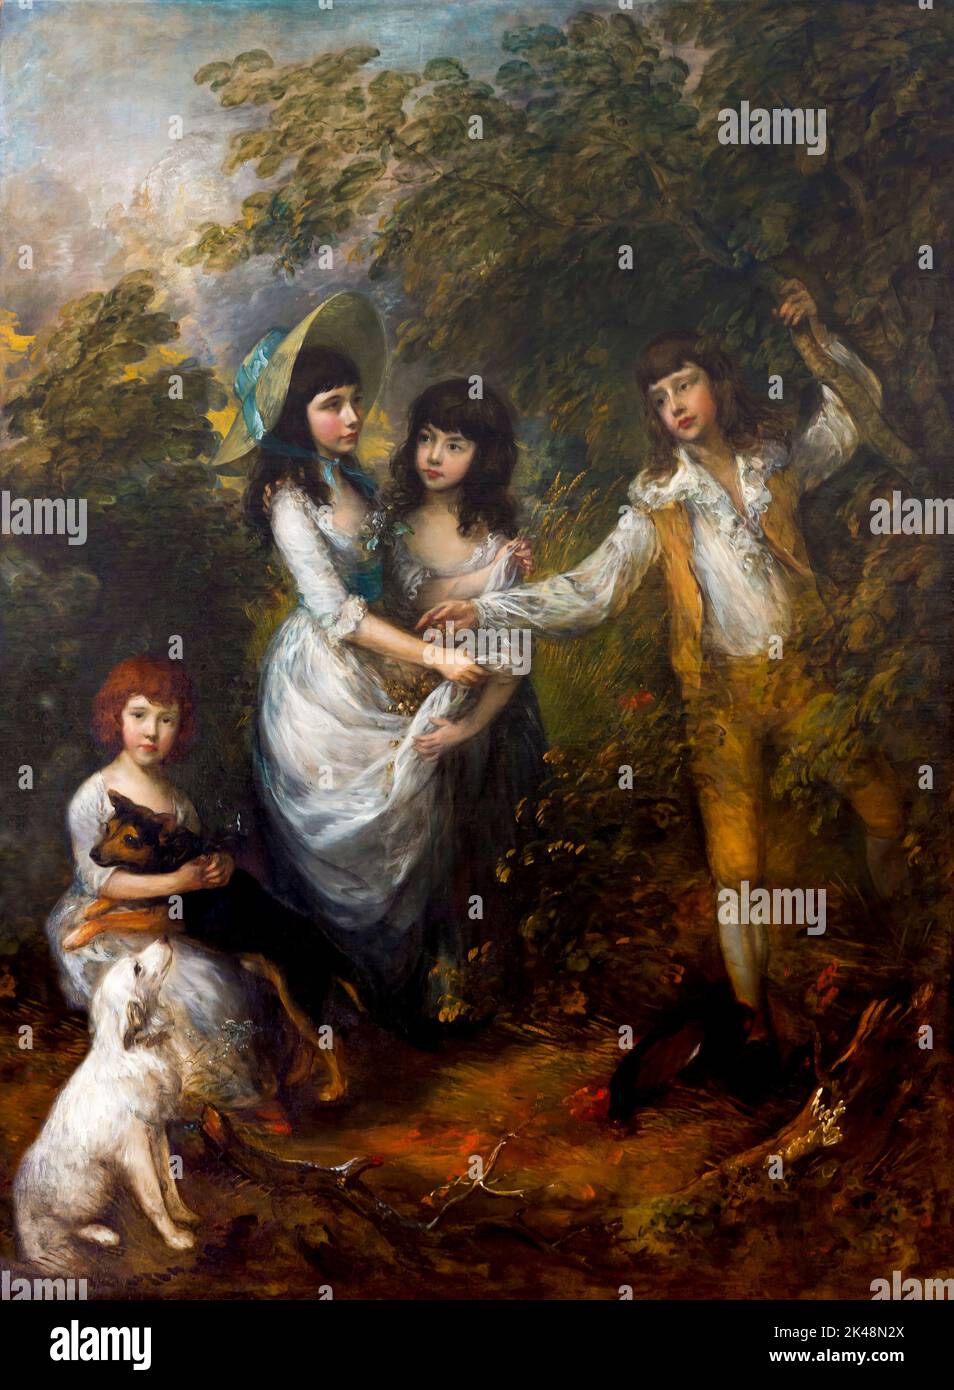 The Marsham Children, Thomas Gainsborough, 1787, Gemaldegalerie, Berlin, Allemagne, Europe Banque D'Images